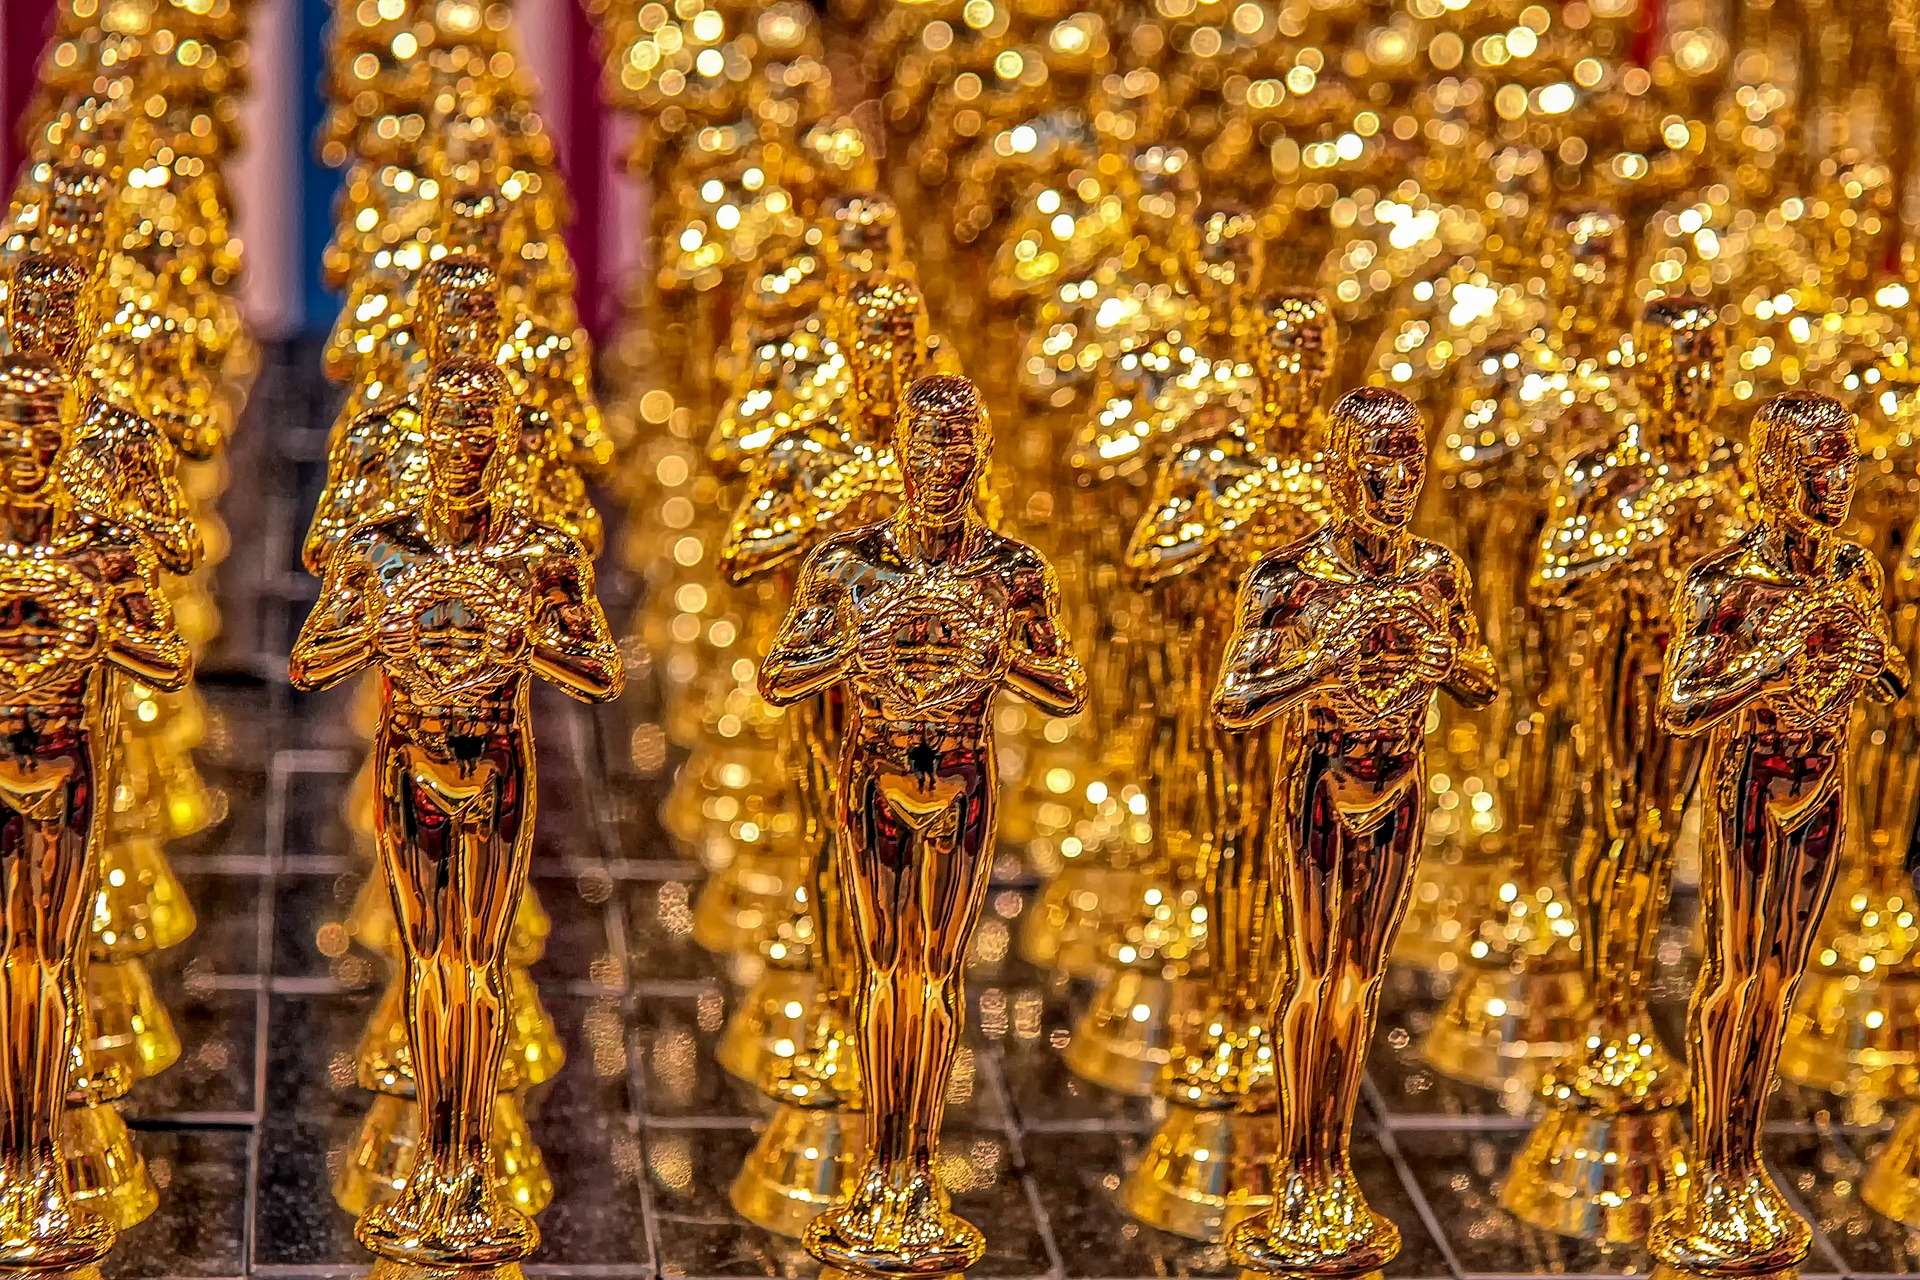 Oscar 2021: dove vedere i film vincitori in streaming